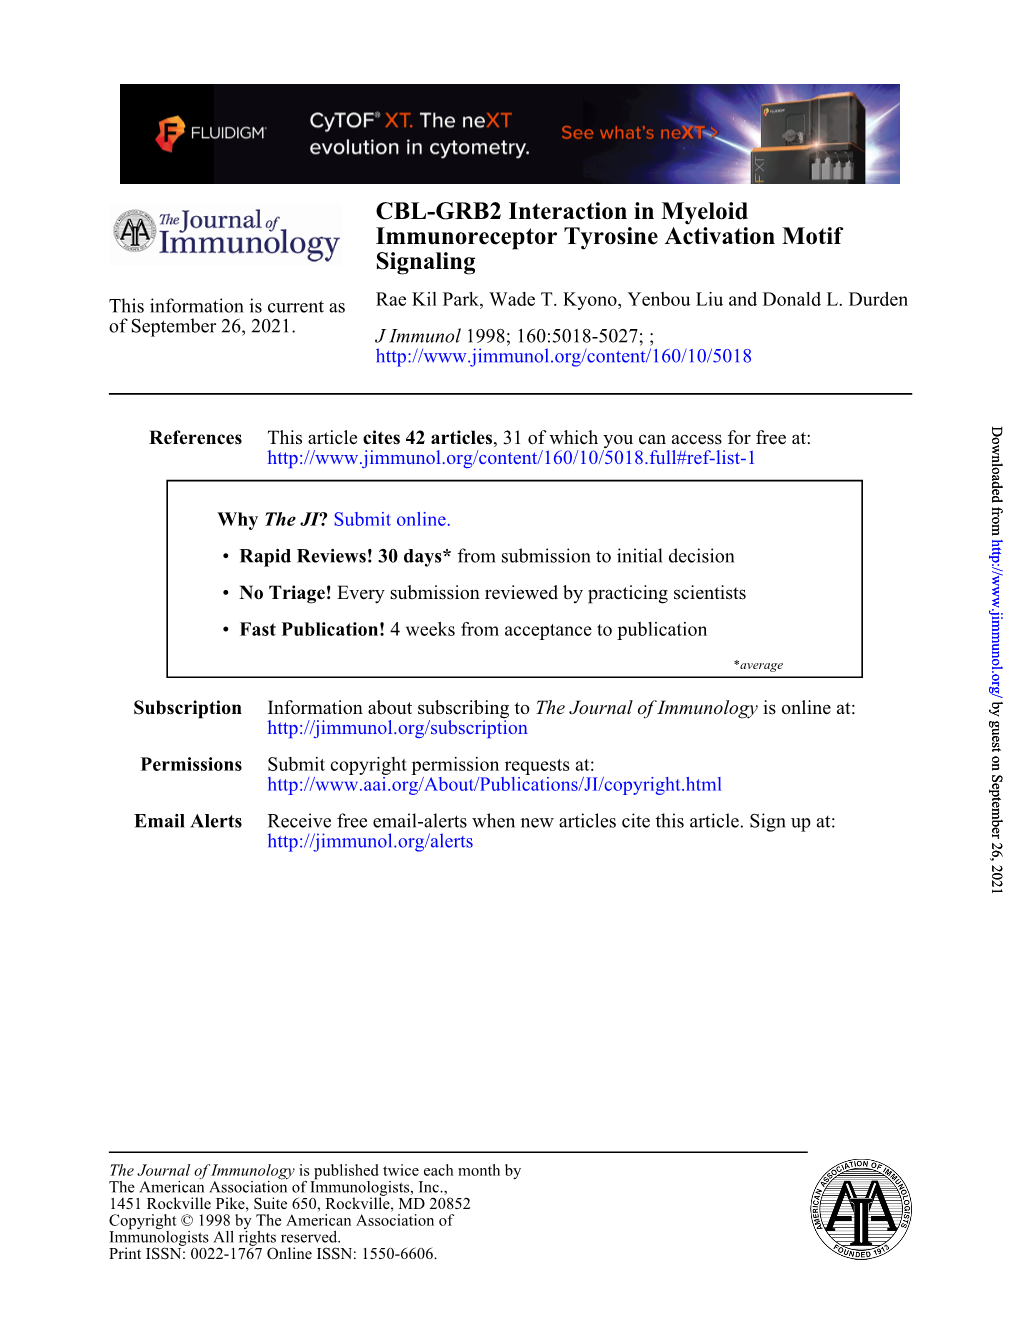 Signaling Immunoreceptor Tyrosine Activation Motif CBL-GRB2